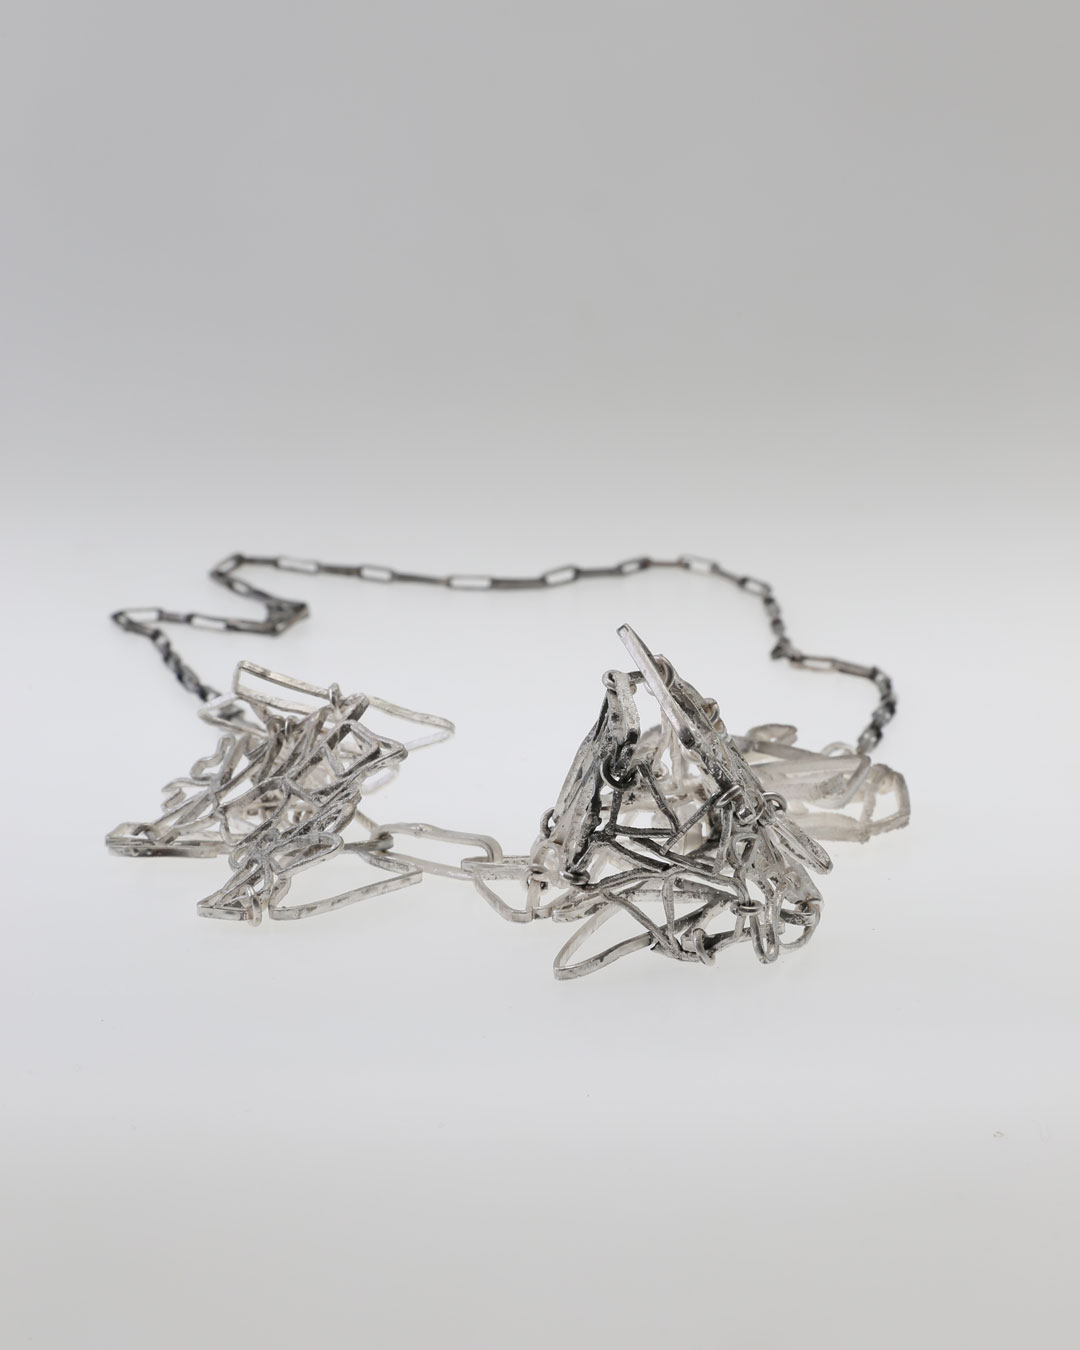 Rudolf Kocéa, Wachsen (Grow), 2018, necklace; silver, L 440 mm, €3250